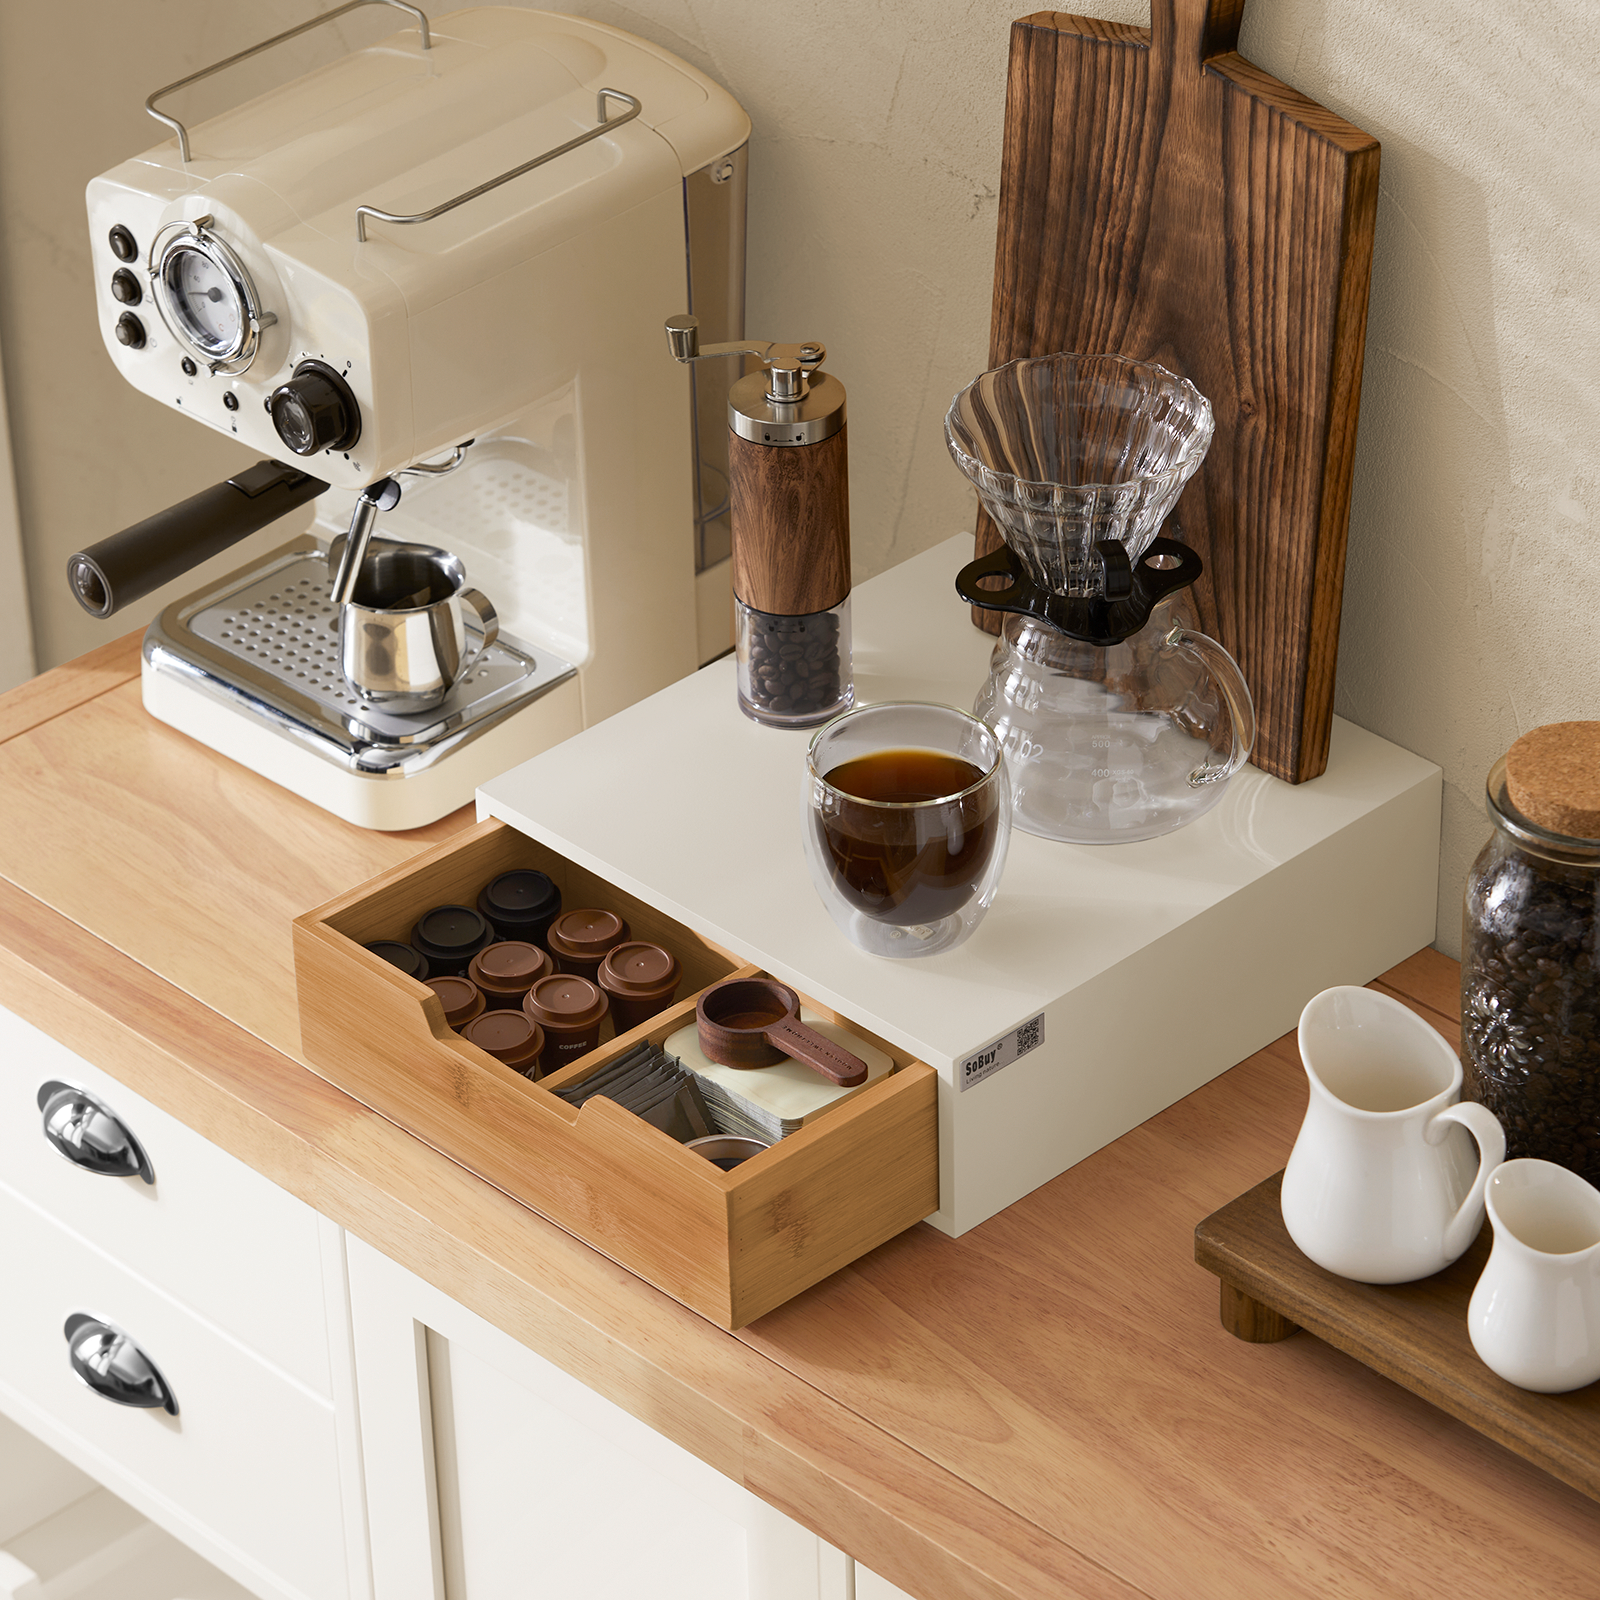 SoBuy Coffee Pod Storage Drawer, Coffee Capsule Holder Stand Box  FRG179-WN